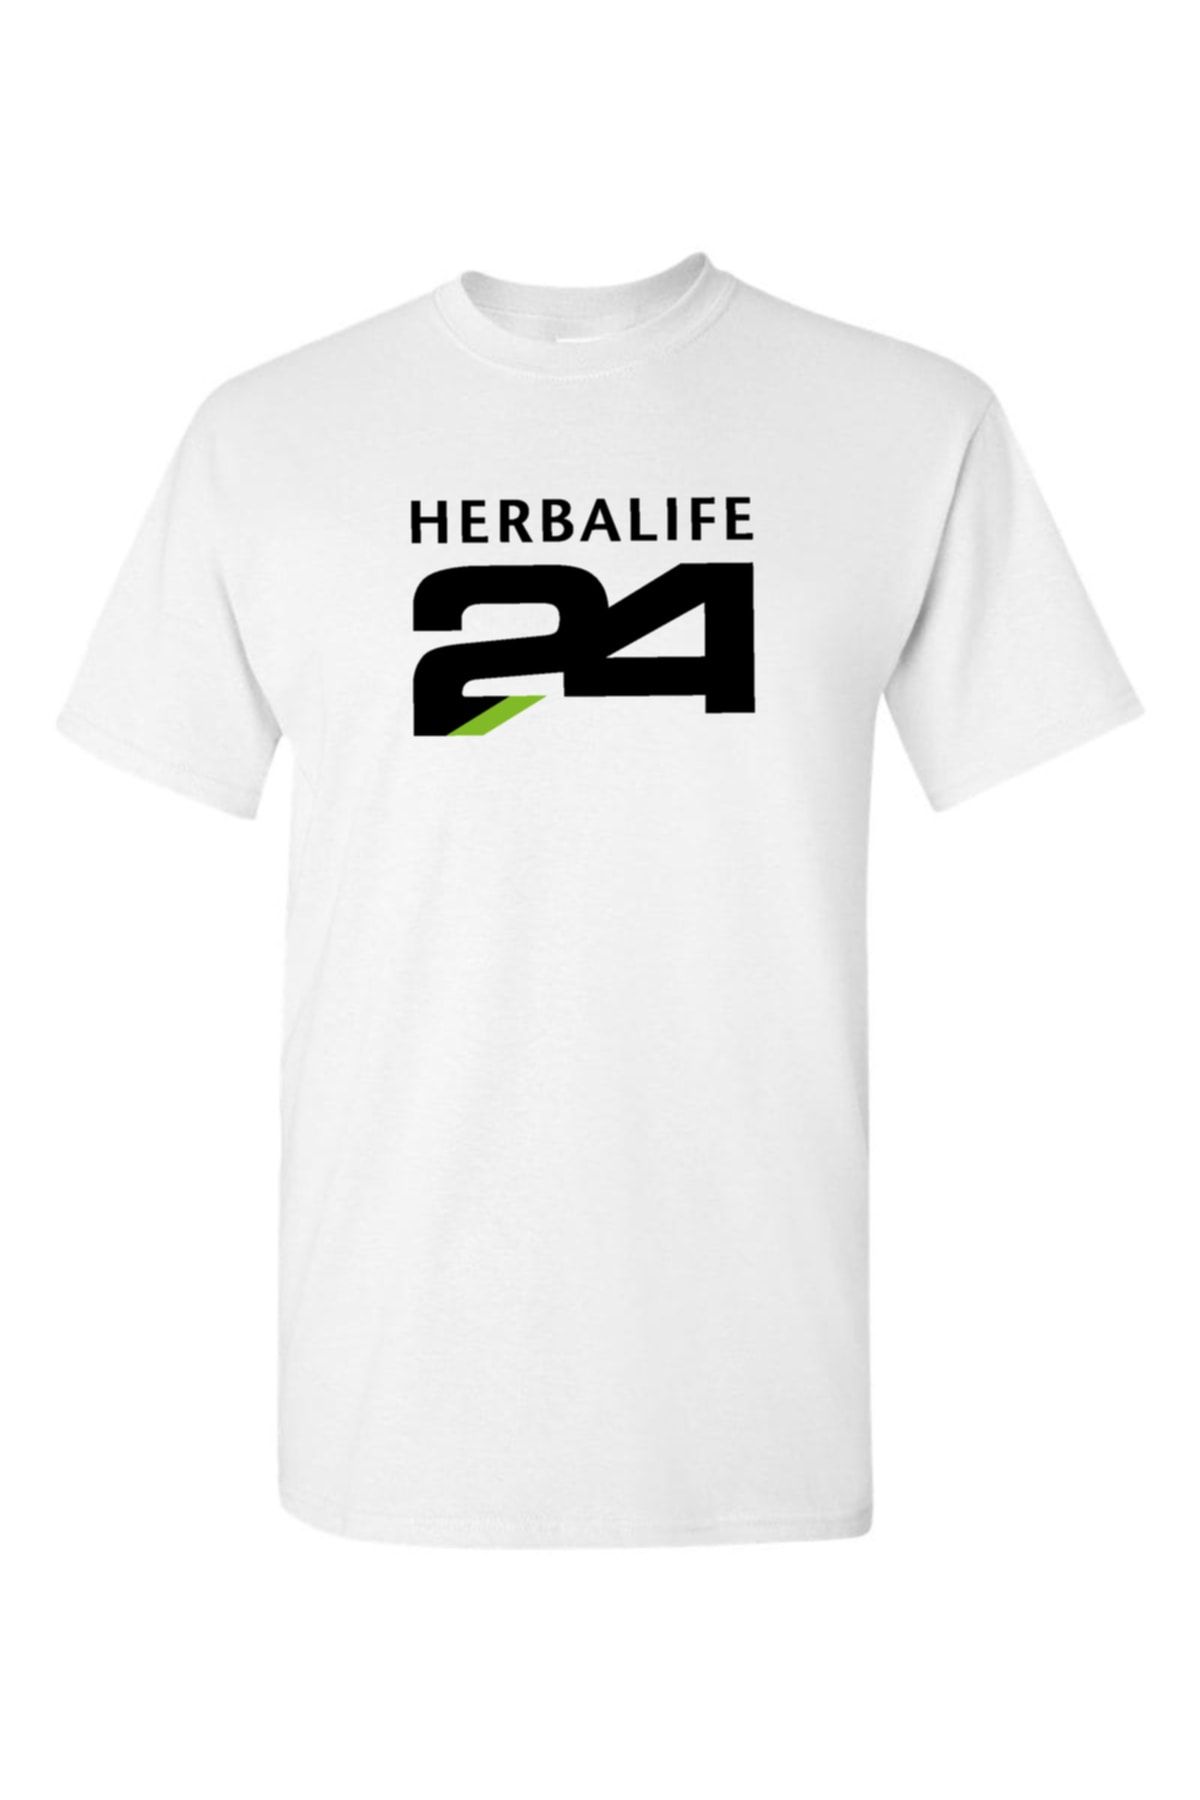 Elit Baskı Herbalife Tshirt Beyaz Dri Fit Sporcu Kumaş Herbal Tshirt , H24 Baskılı